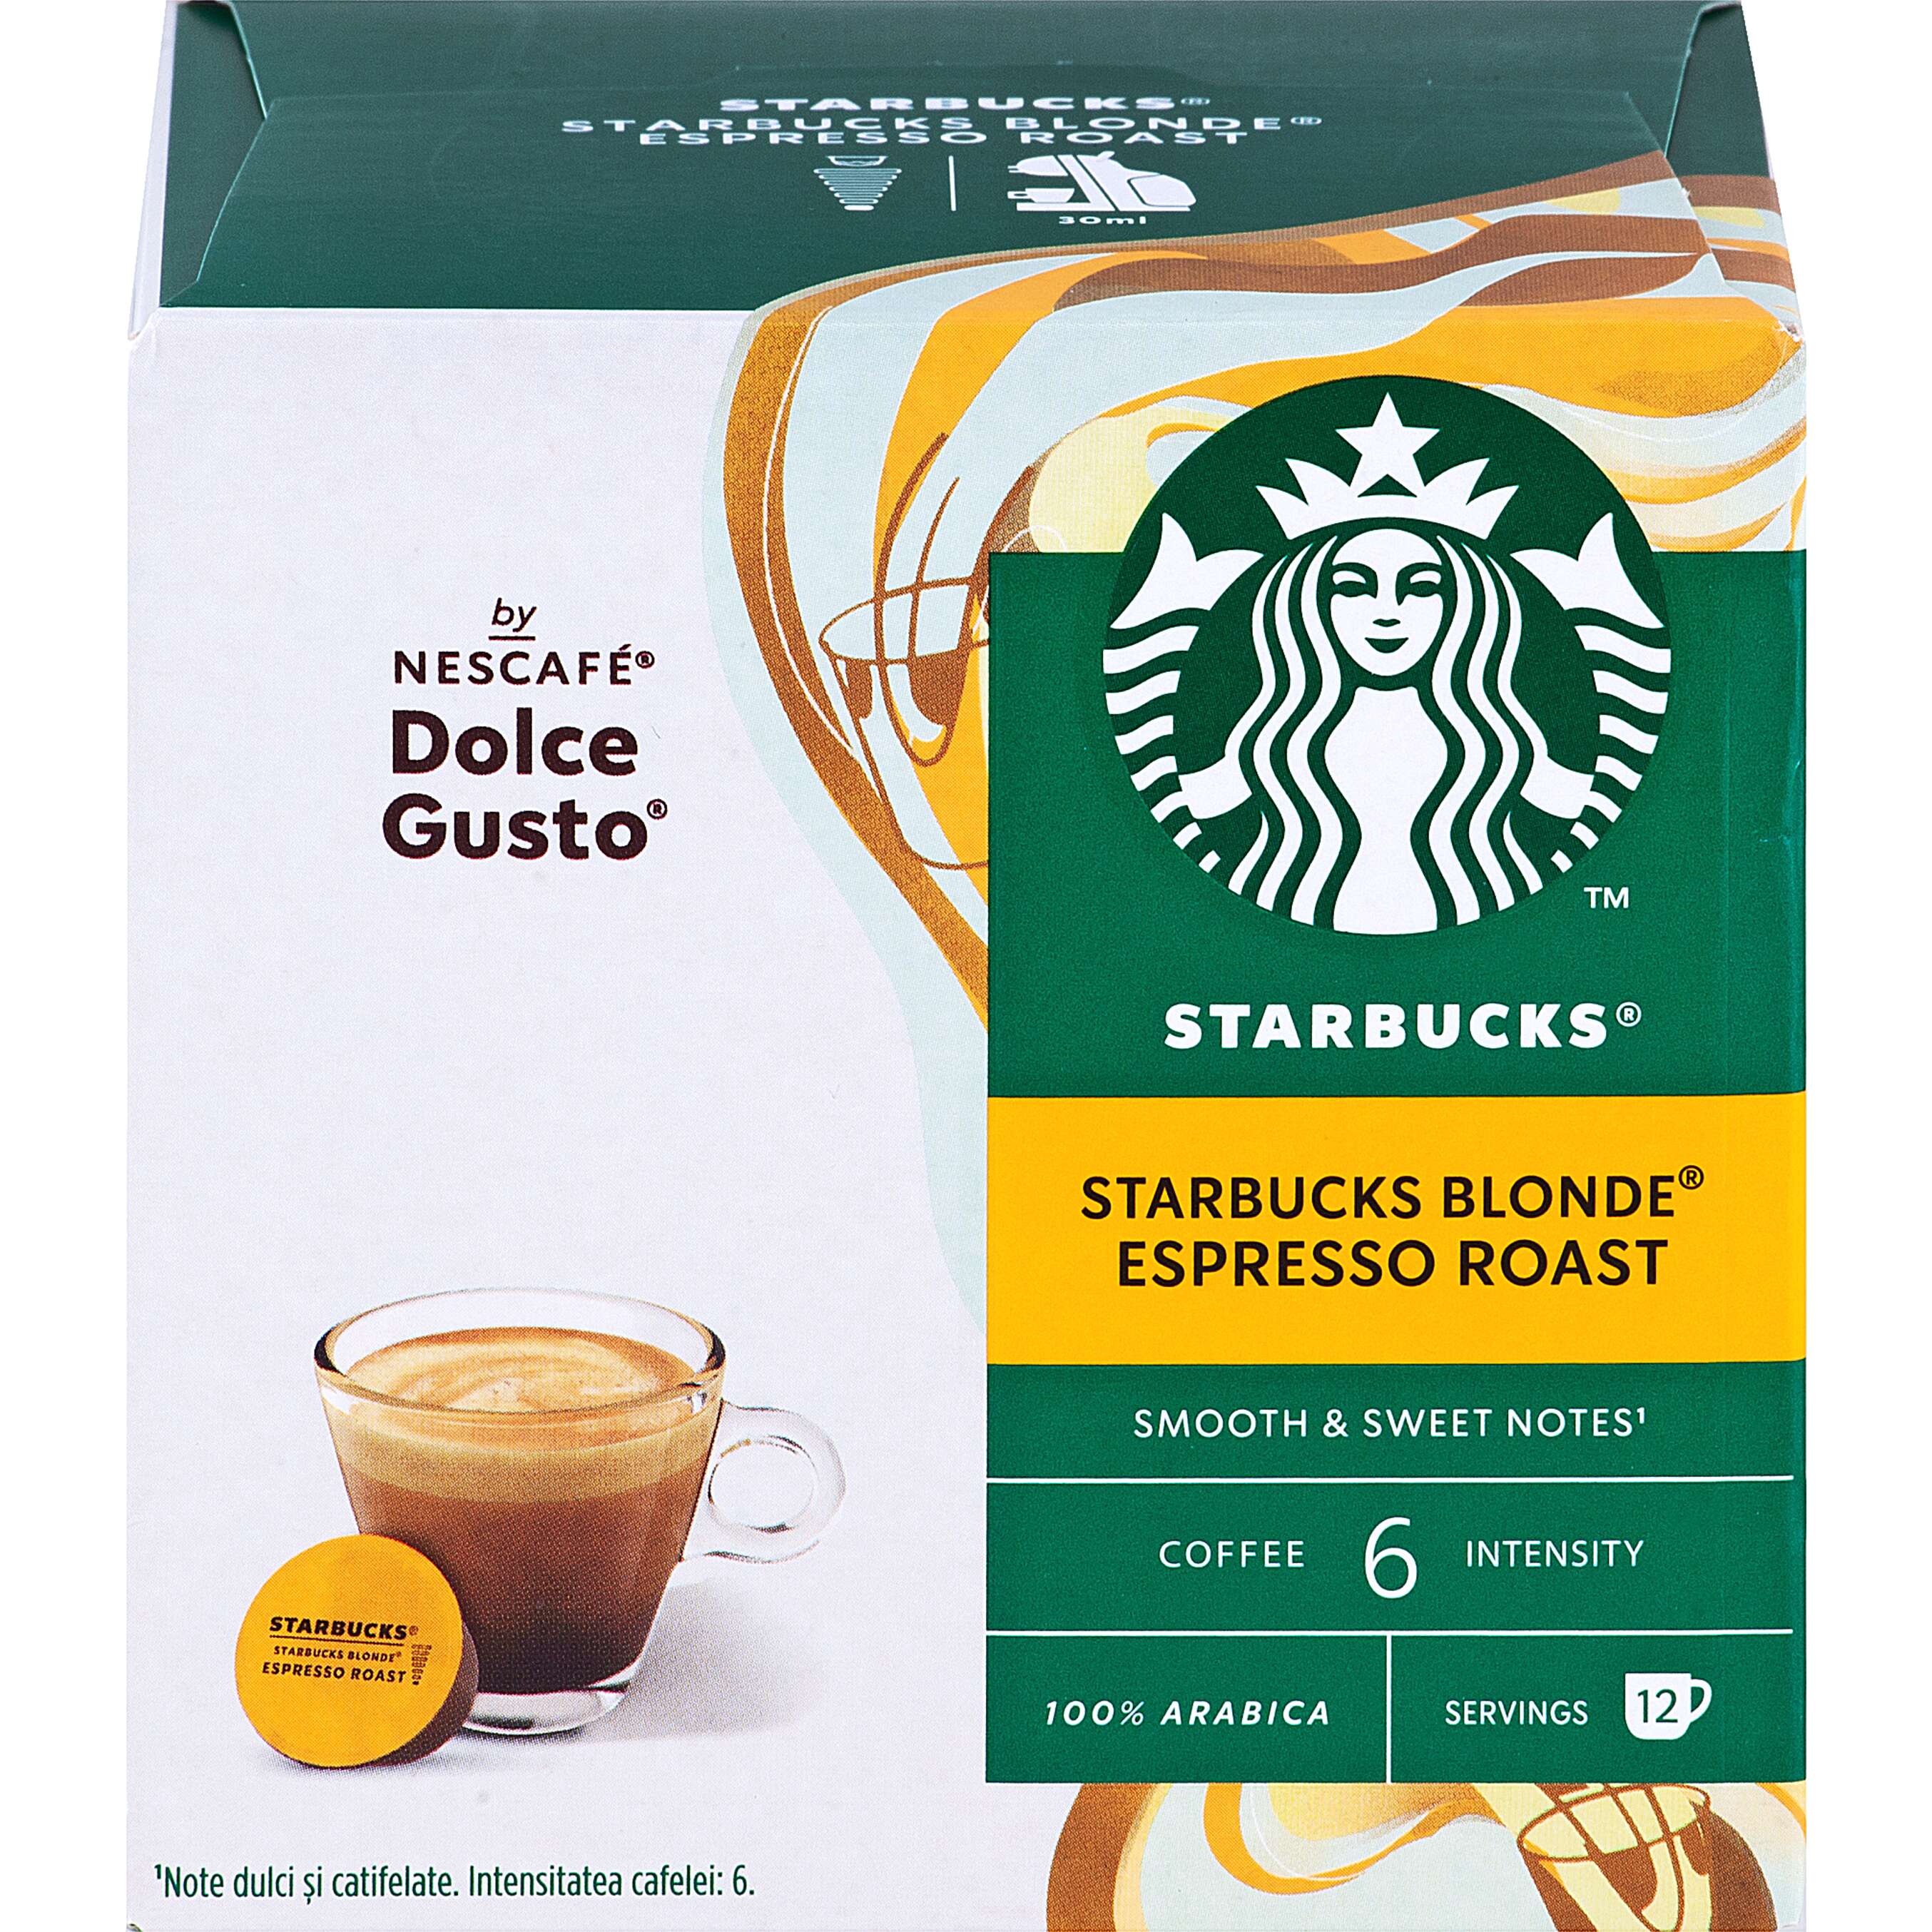 Fotografija ponude Starbucks DG Blonde Espresso kapsule